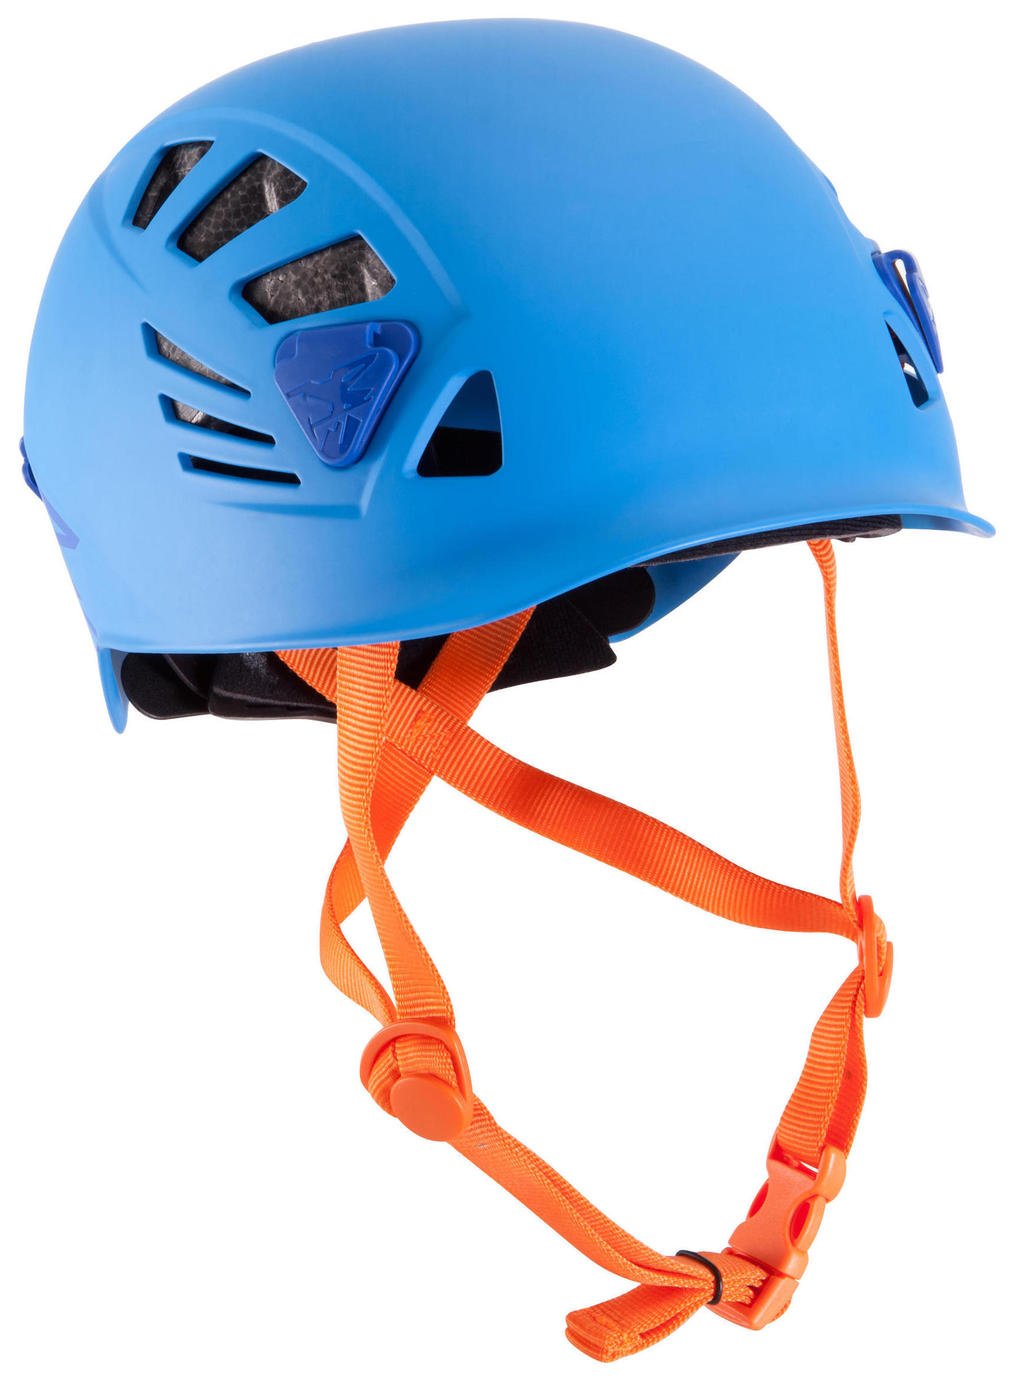 Decathlon Climbing Adult Bike Helmet - Blue, 50-57cm